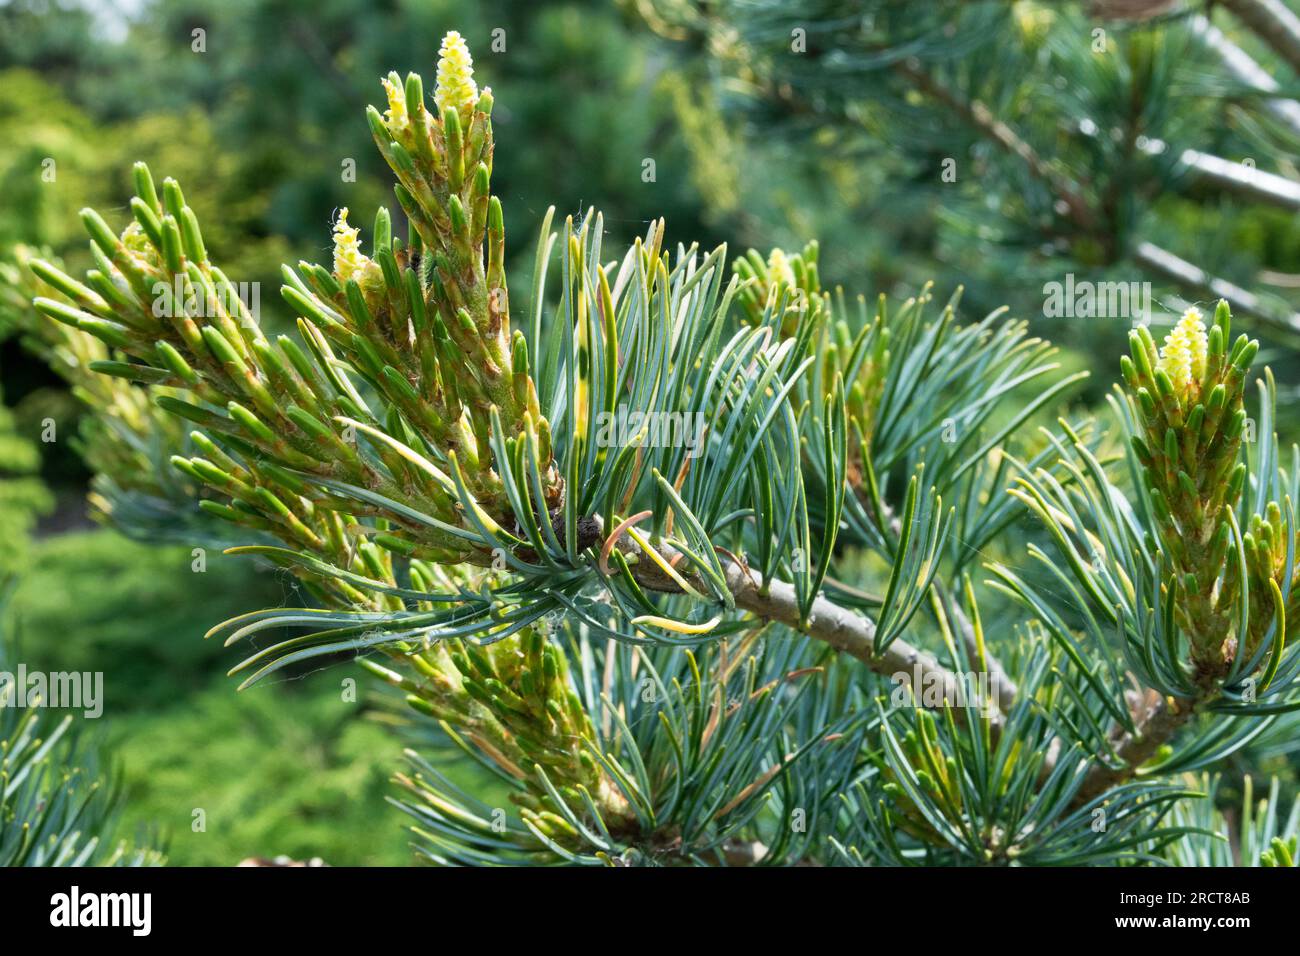 Japanese White Pine, Pinus parviflora 'Shikoku', Needles, Branch Stock Photo